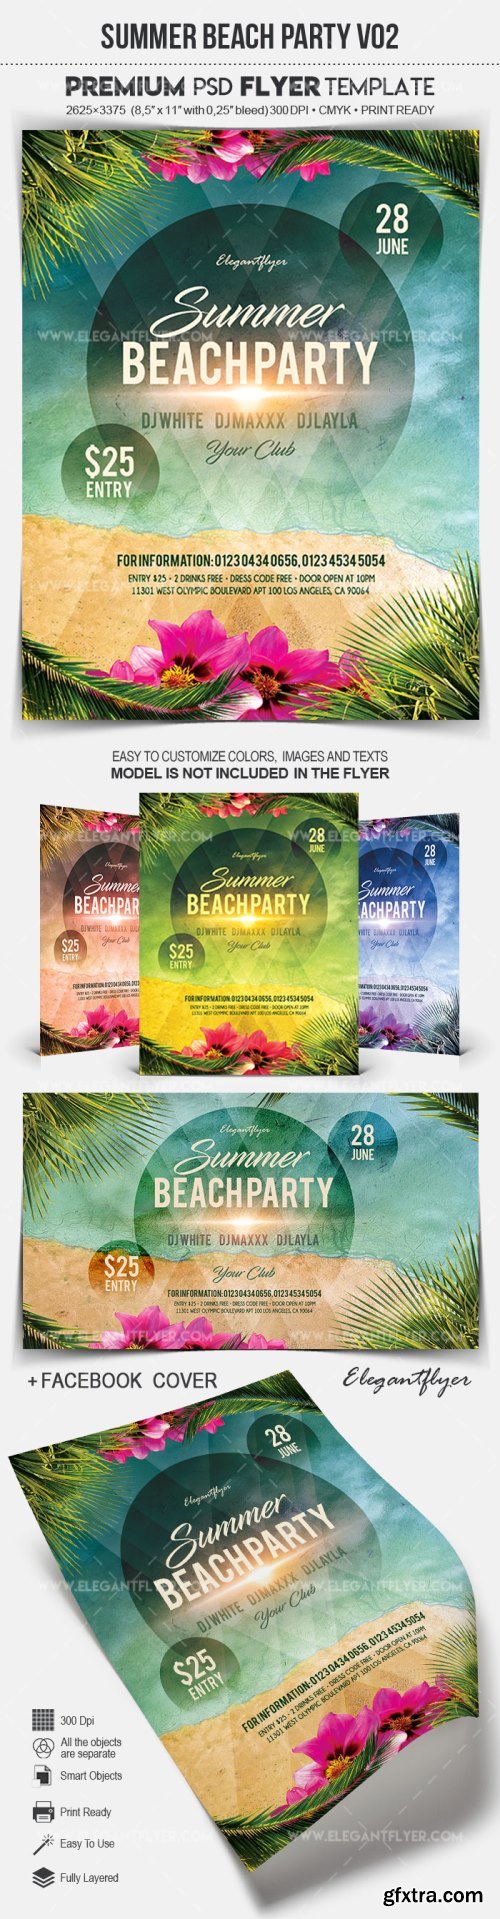 Summer Beach Party V02 – Flyer PSD Template